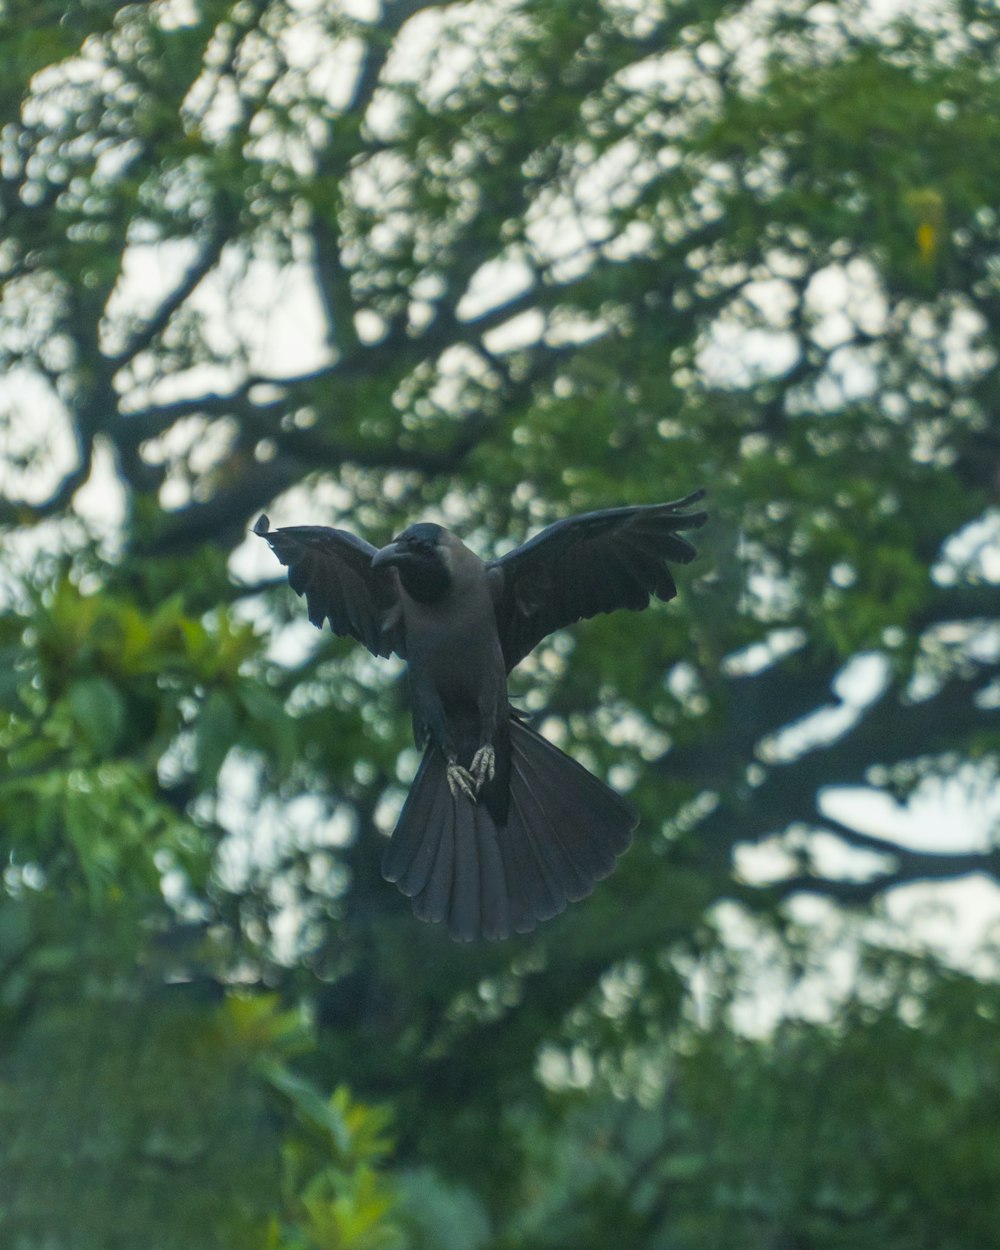 a bird flying through the air near a tree